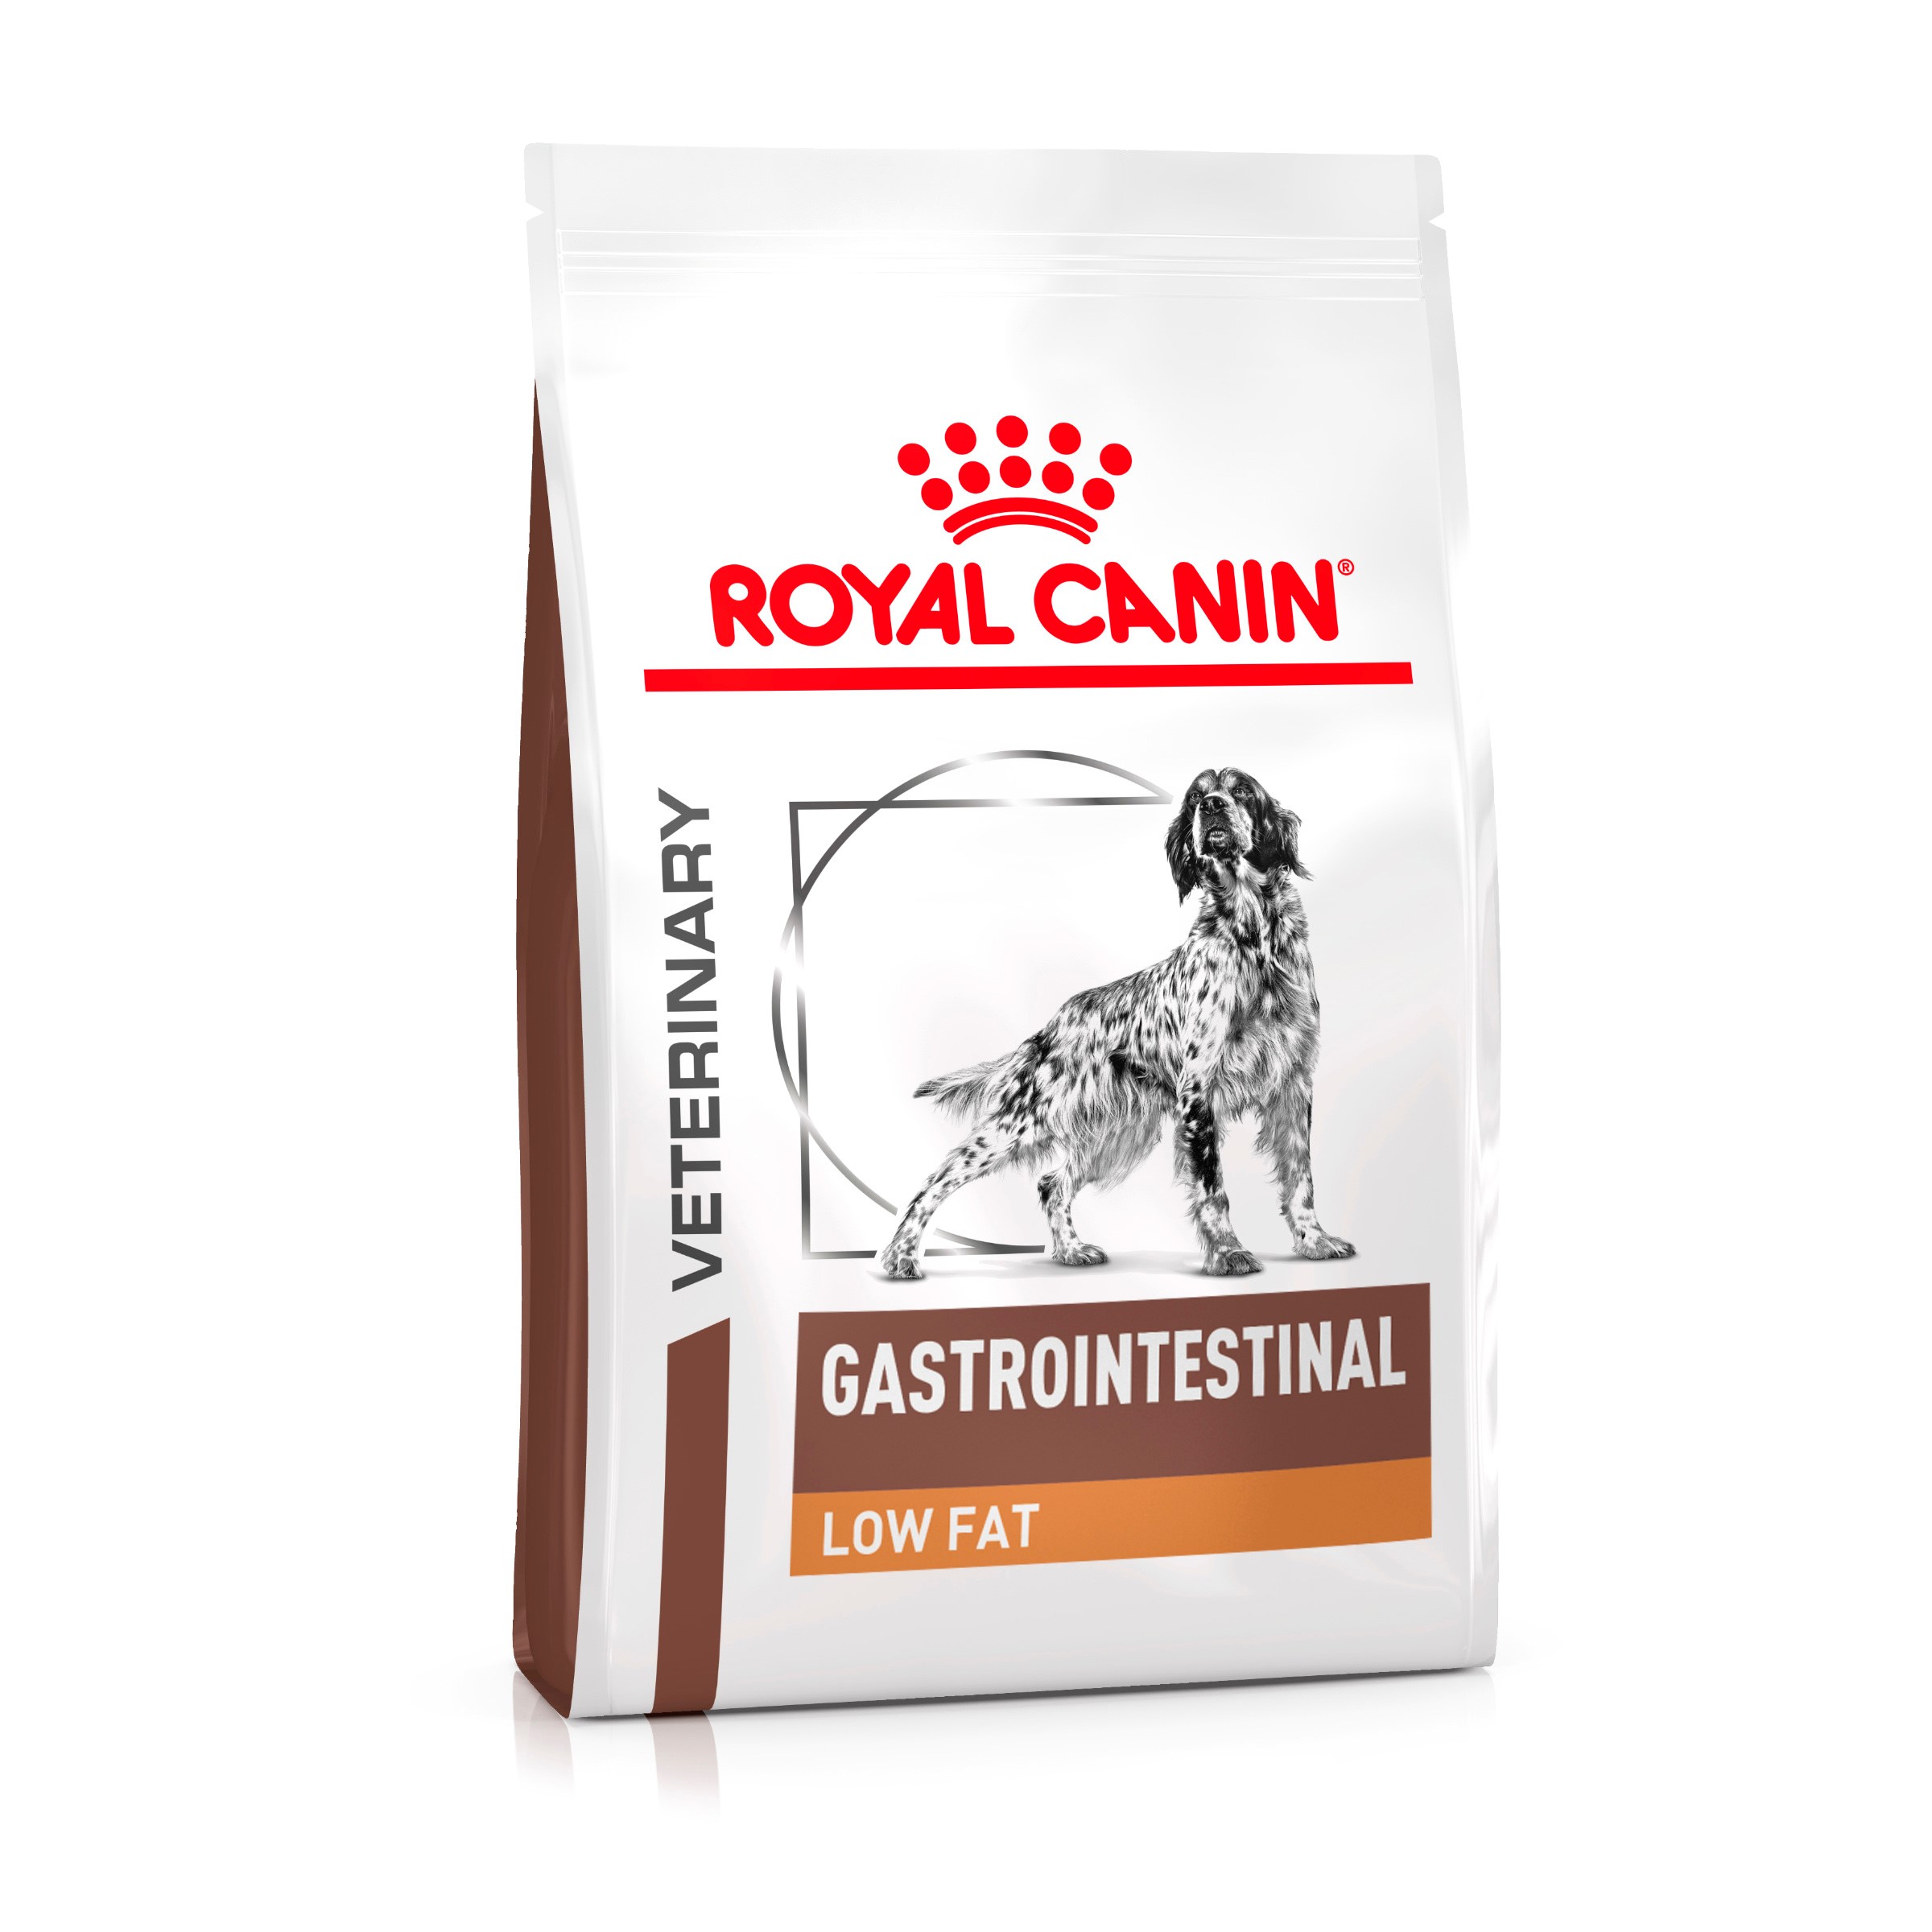 ROYAL CANIN Veterinary GASTROINTESTINAL LOW FAT Trockenfutter für Hunde 